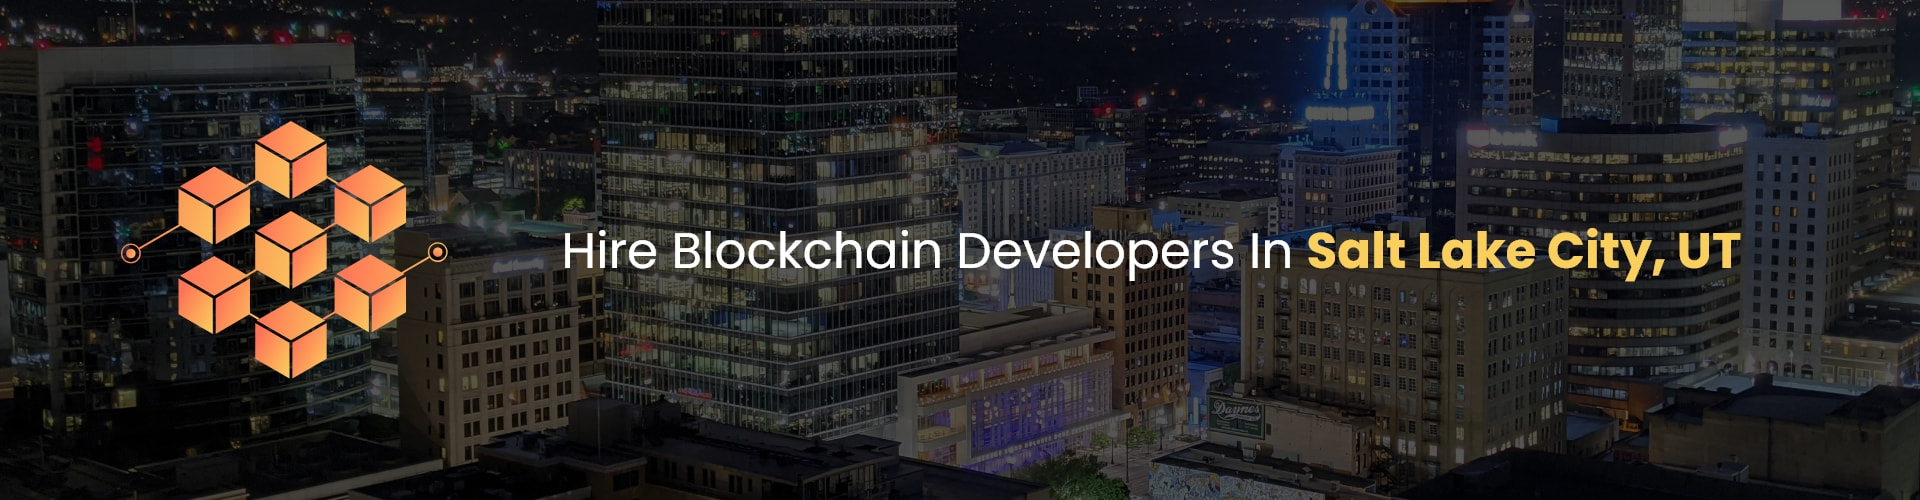 hire blockchain developers in salt lake city